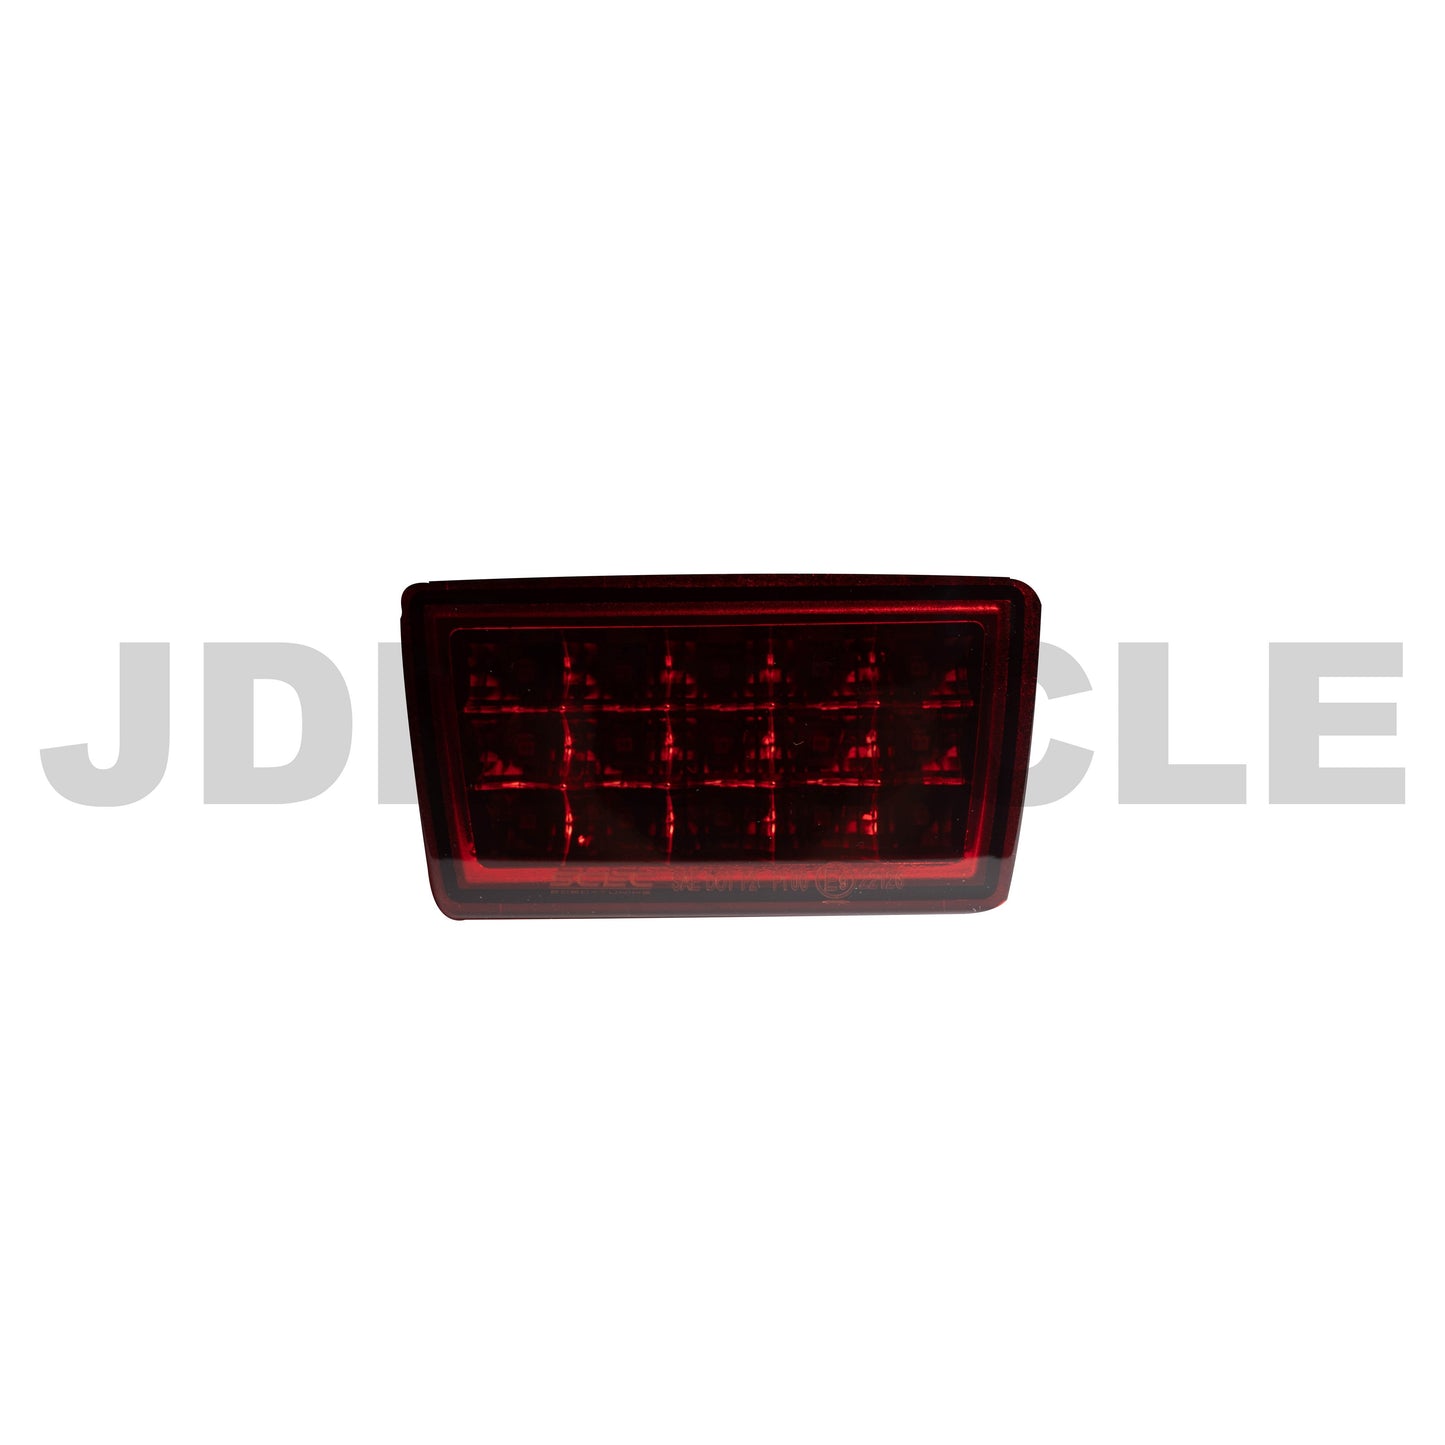 JDMuscle F1 Style Rear Fog/Brake Light for 2015+ WRX/STI-JDM-WRX15-F1B-RR-JDM-WRX-F1B-RR-Auxiliary Brake Lighting-JDMuscle-1.Red Lens/Red Base-JDMuscle